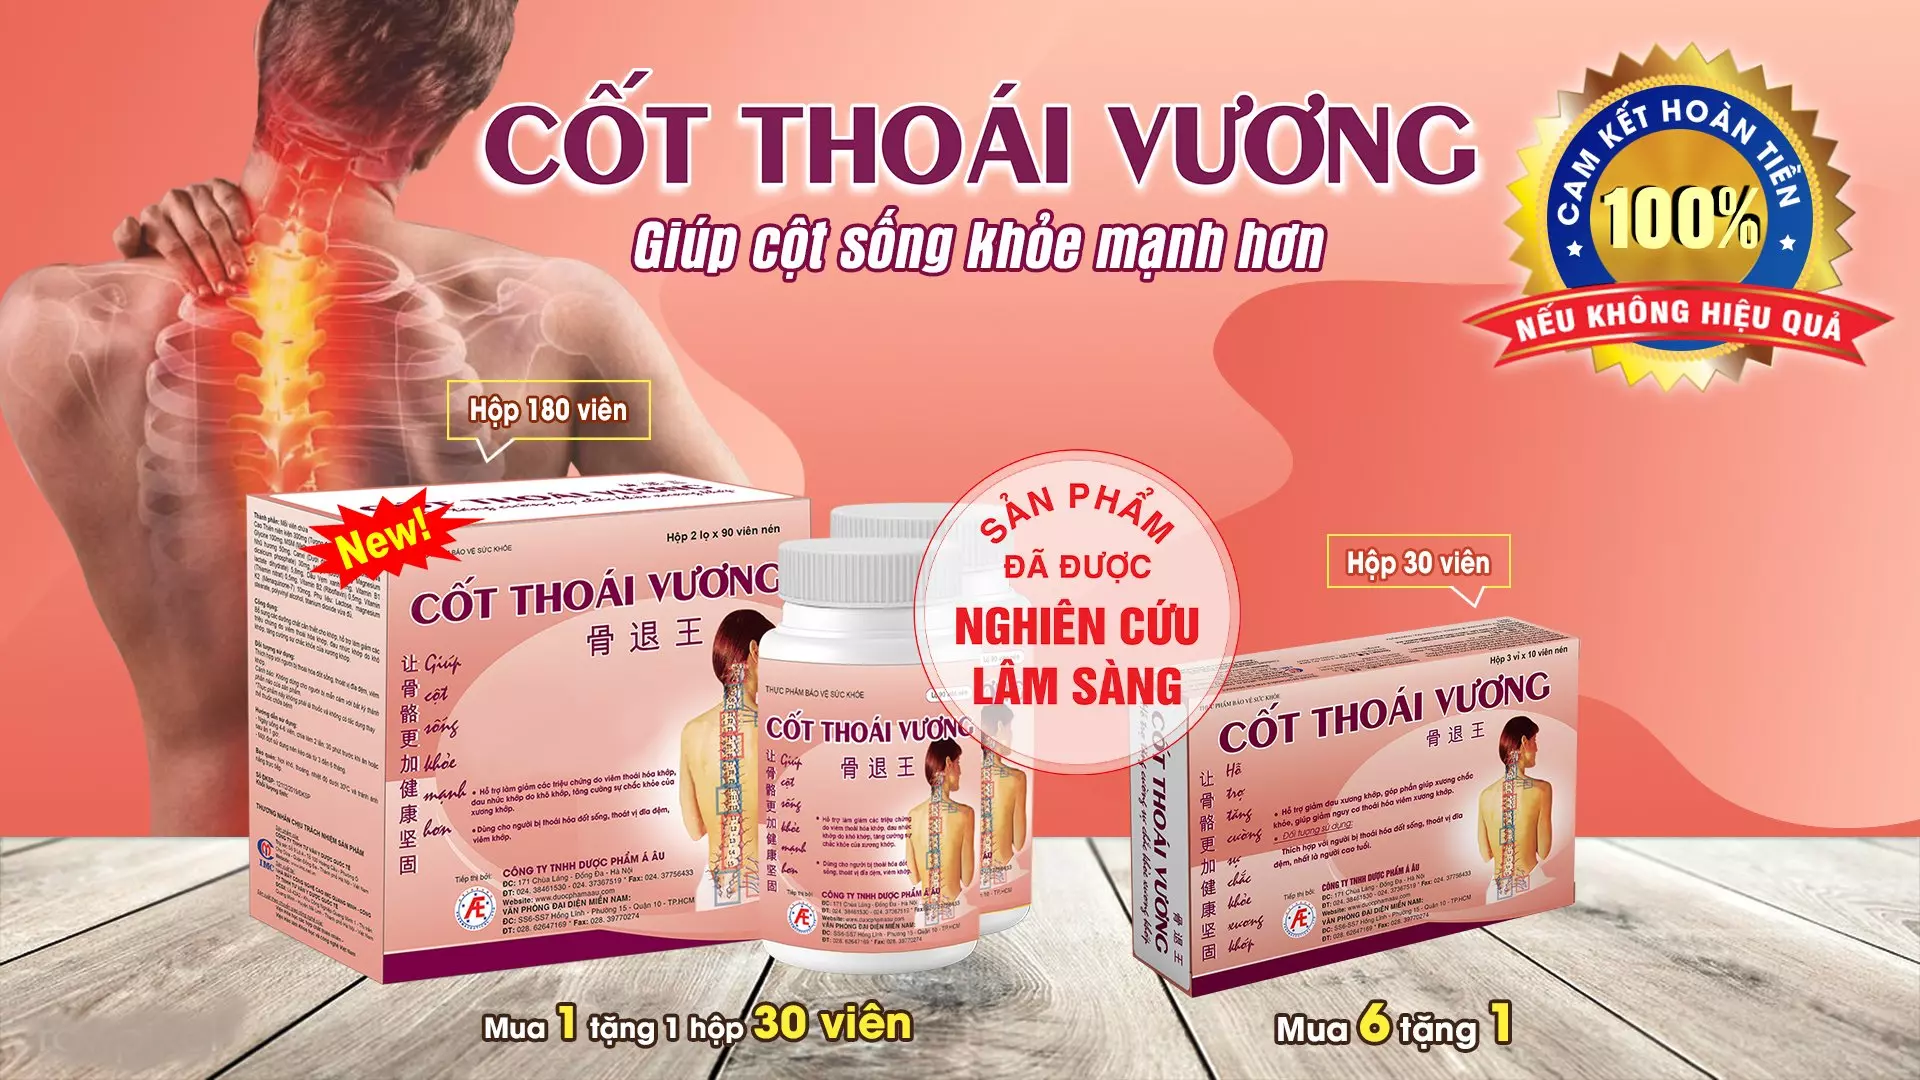 Ho-tro-giam-dau-lung-hieu-qua-nho-san-pham-thao-duoc-Cot-Thoai-Vuong